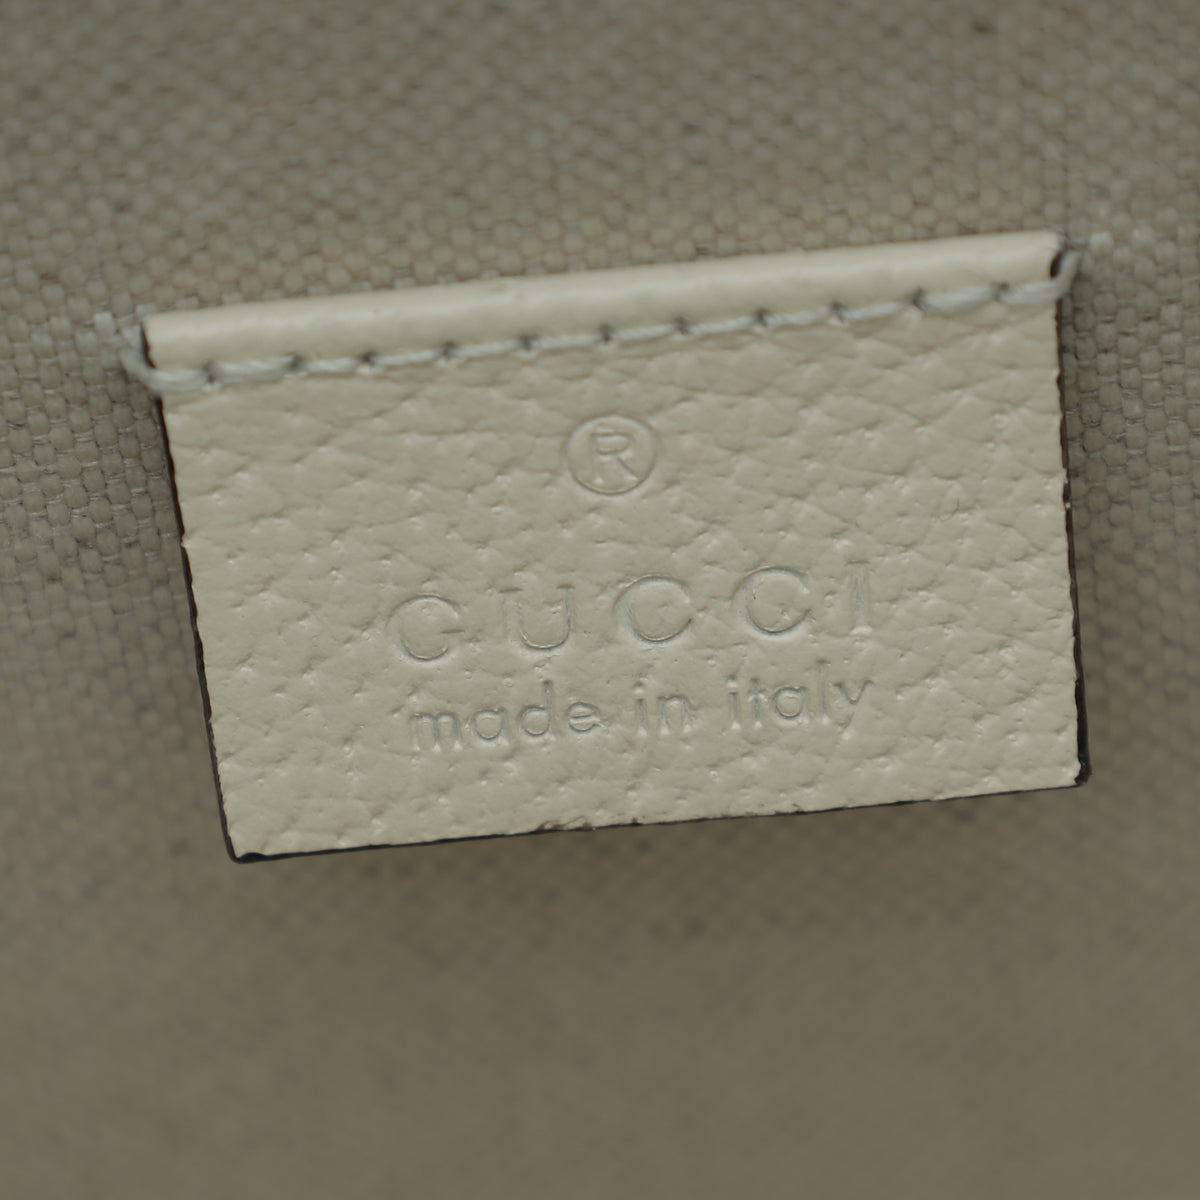 Gucci Ivory Crystal Dionysus Mini Bag